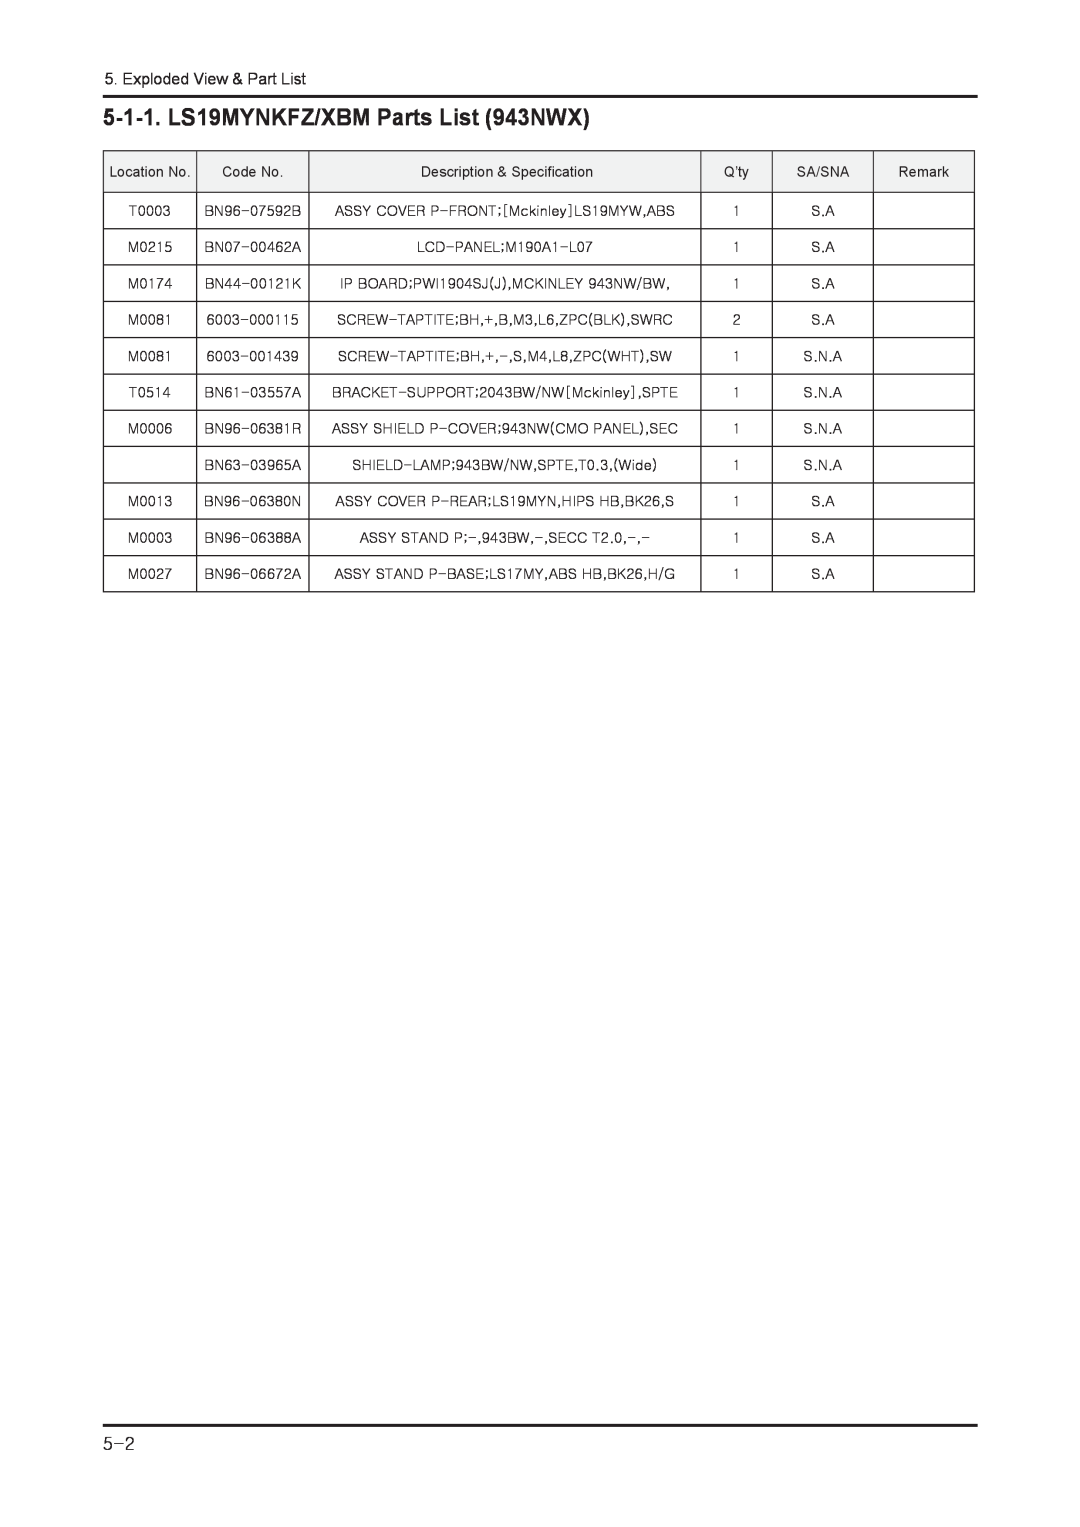 Samsung service manual 5-1-1. LS19MYNKFZ/XBM Parts List 943NWX, Exploded View & Part List 